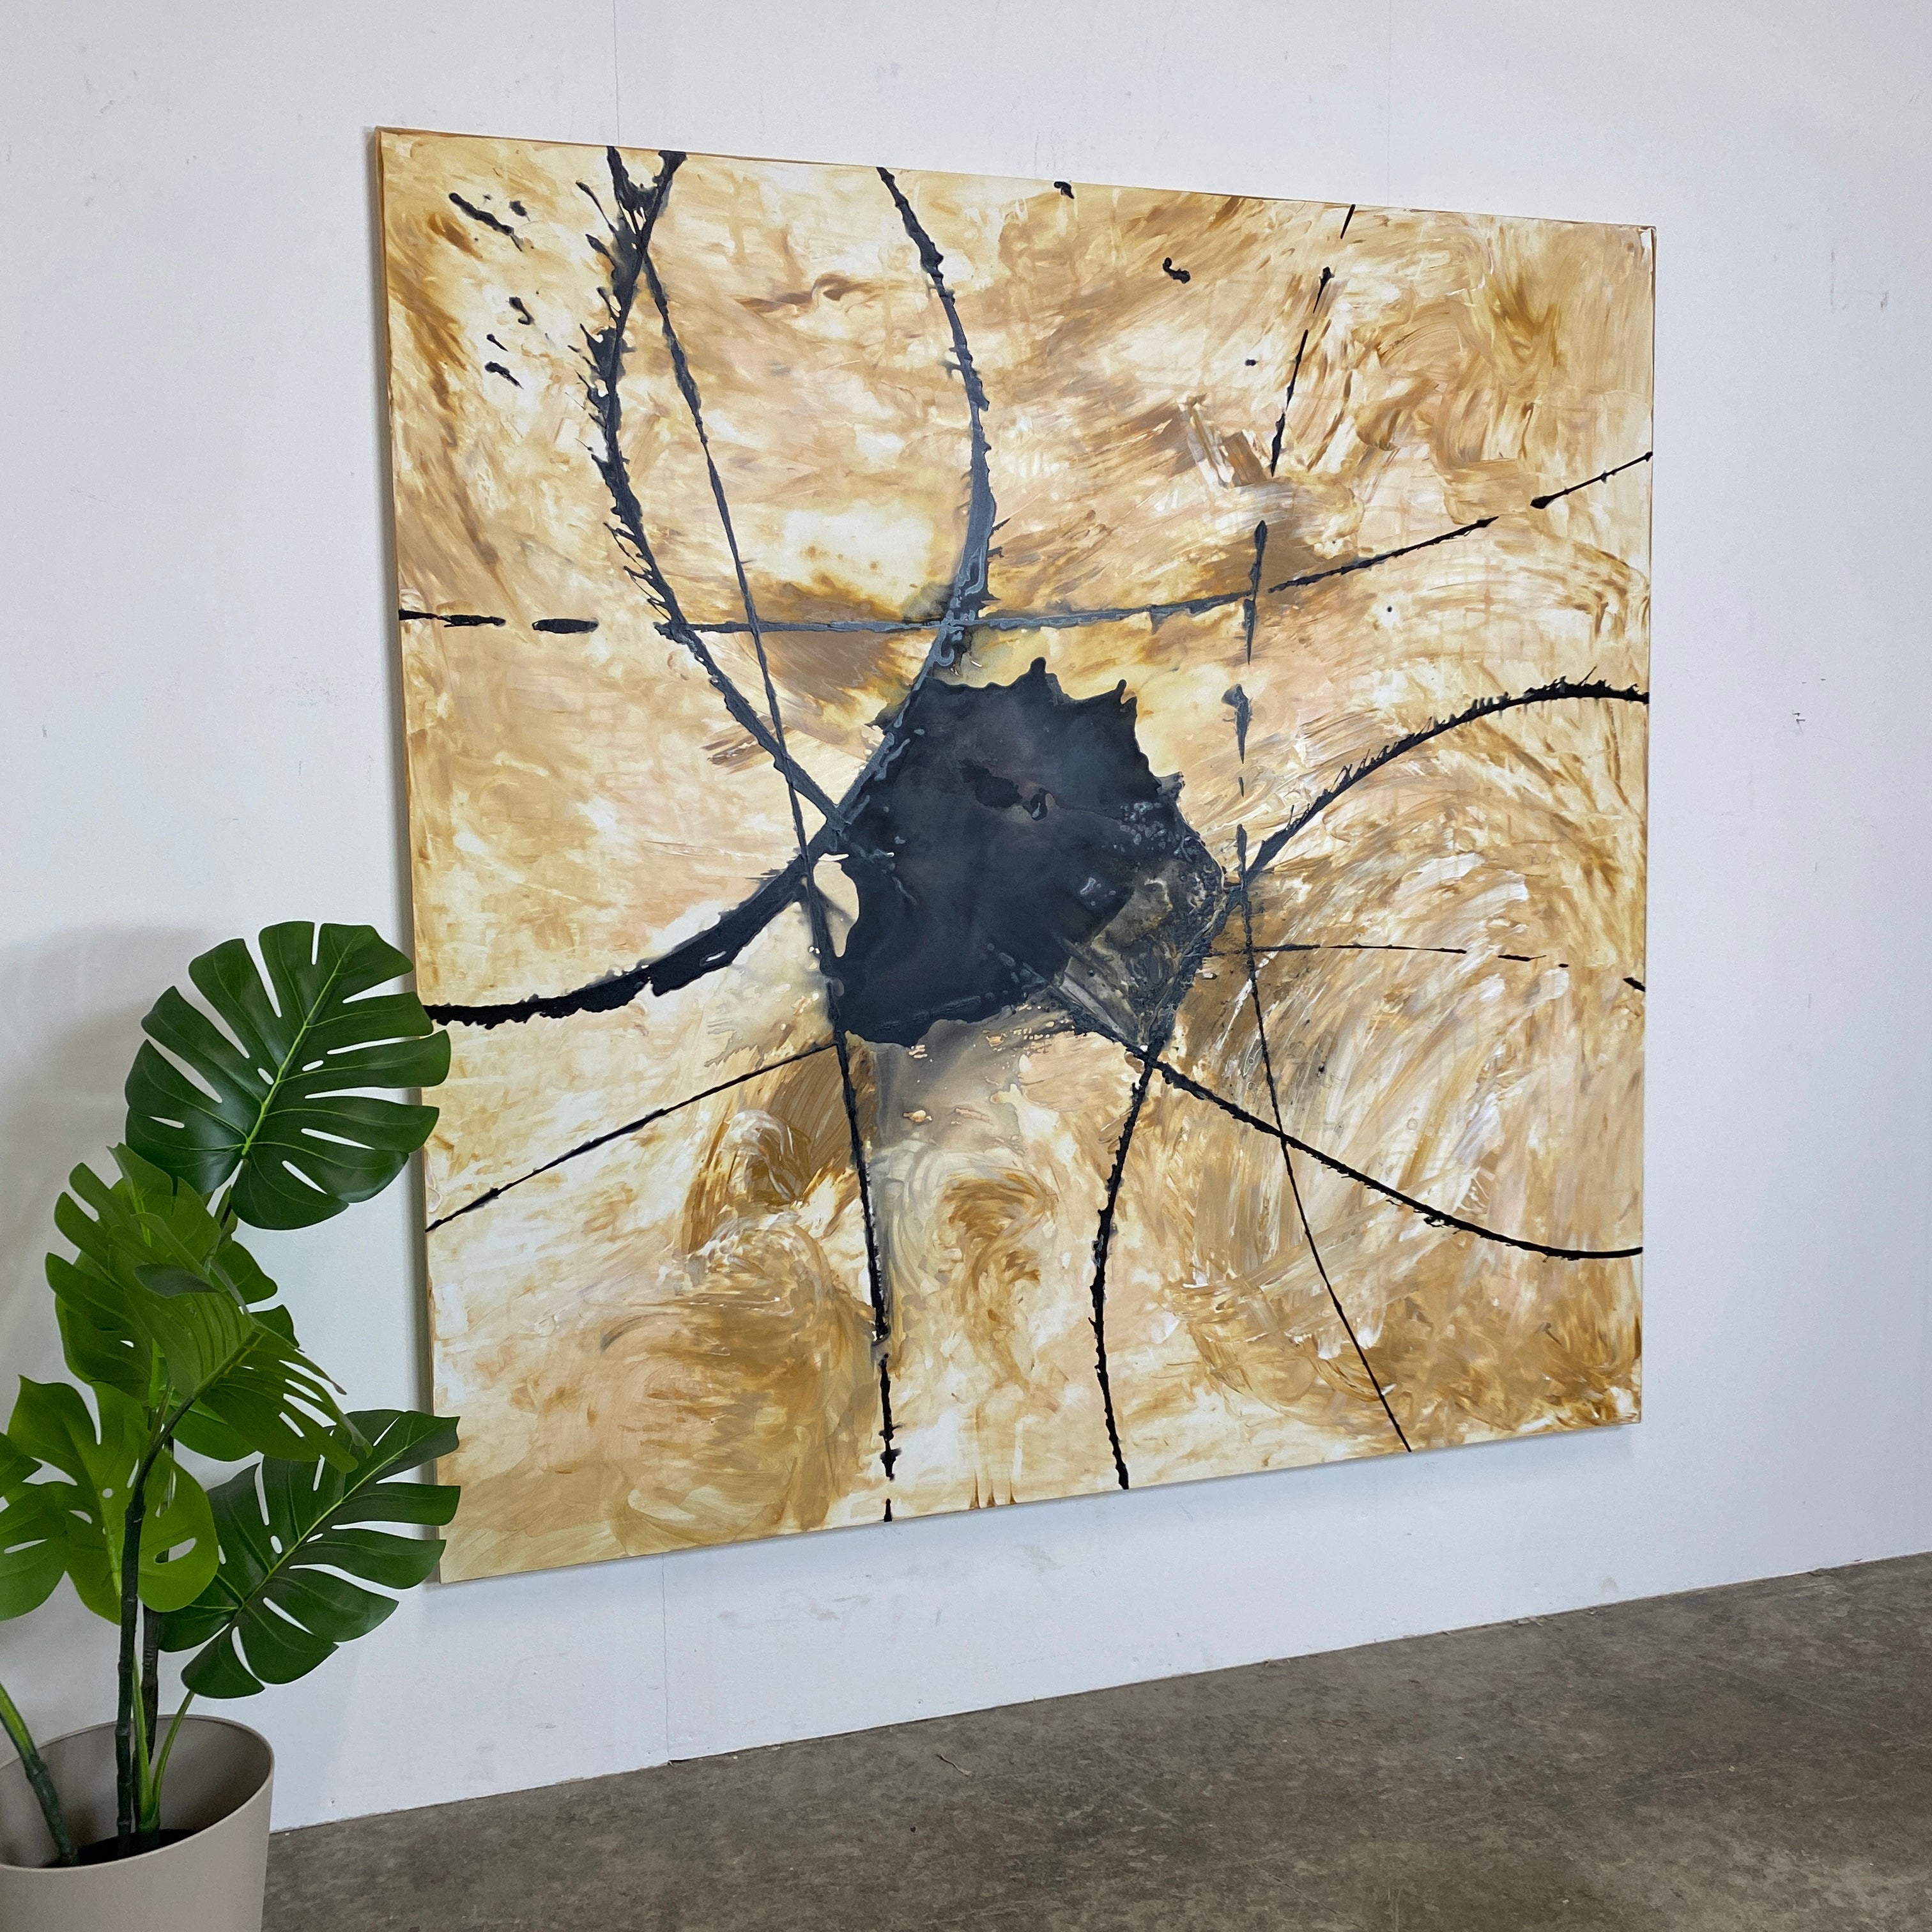 Painting: "Sand Octopus" 150 x 150 cm